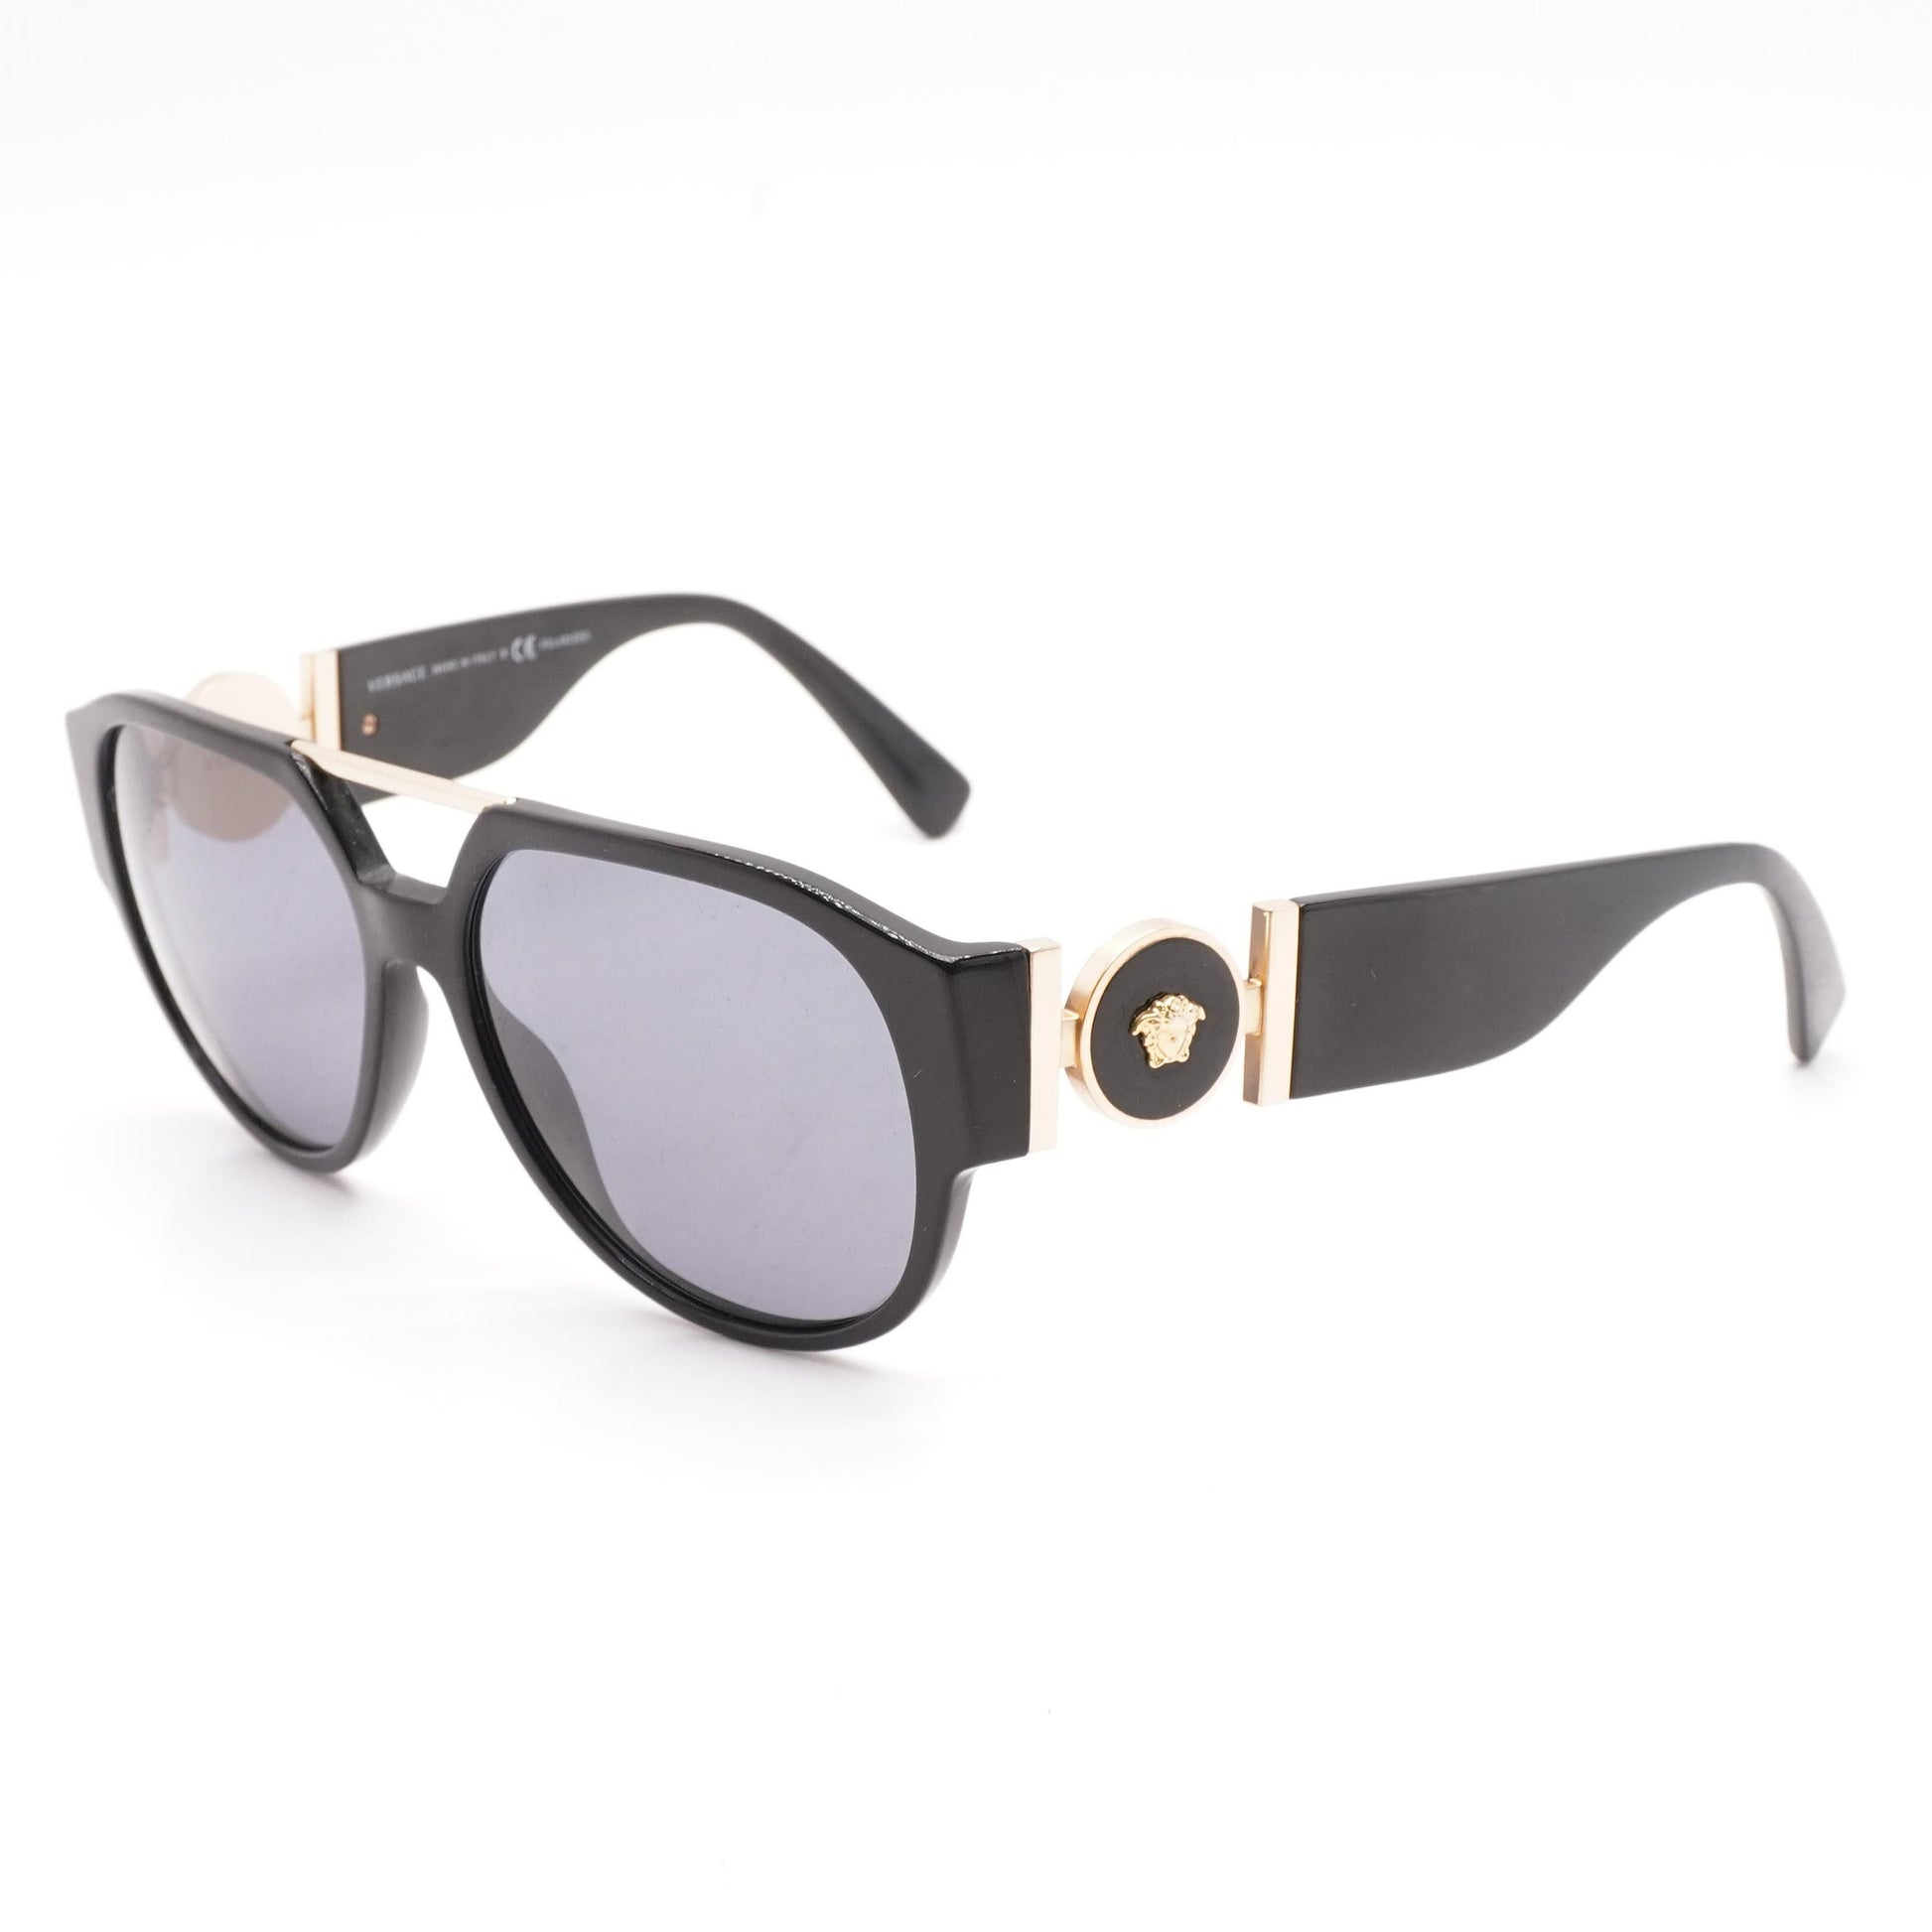 Louis Vuitton - Authenticated Sunglasses - Plastic White for Men, Good Condition